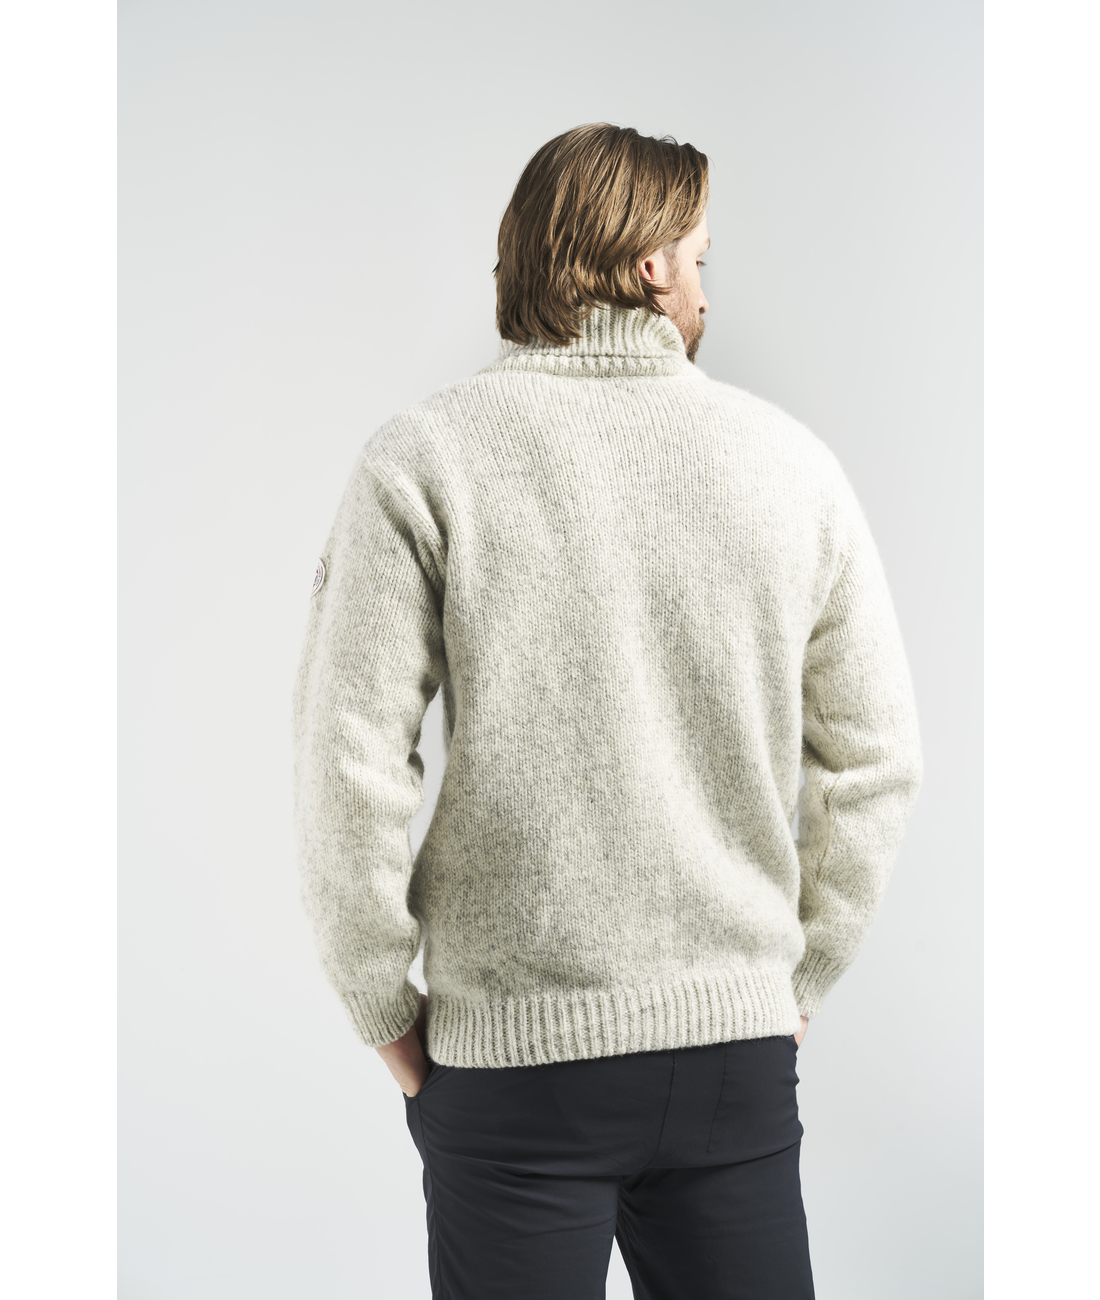 Nansen Sweater Zip Neck